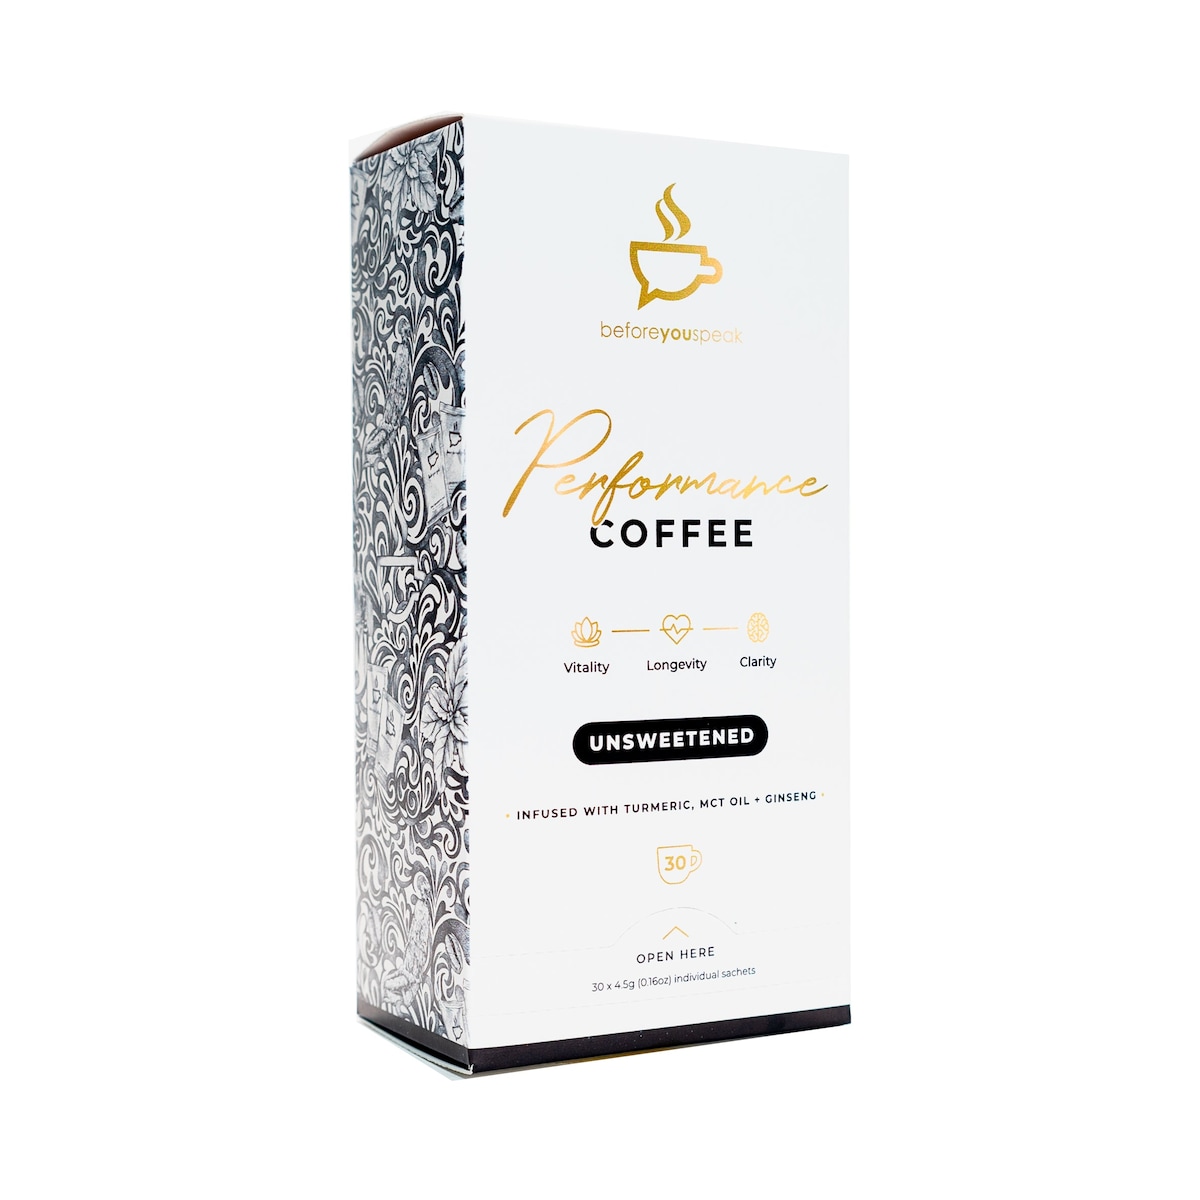 Beforeyouspeak Coffee Performance Coffee Unsweetened 30 x 4.5g